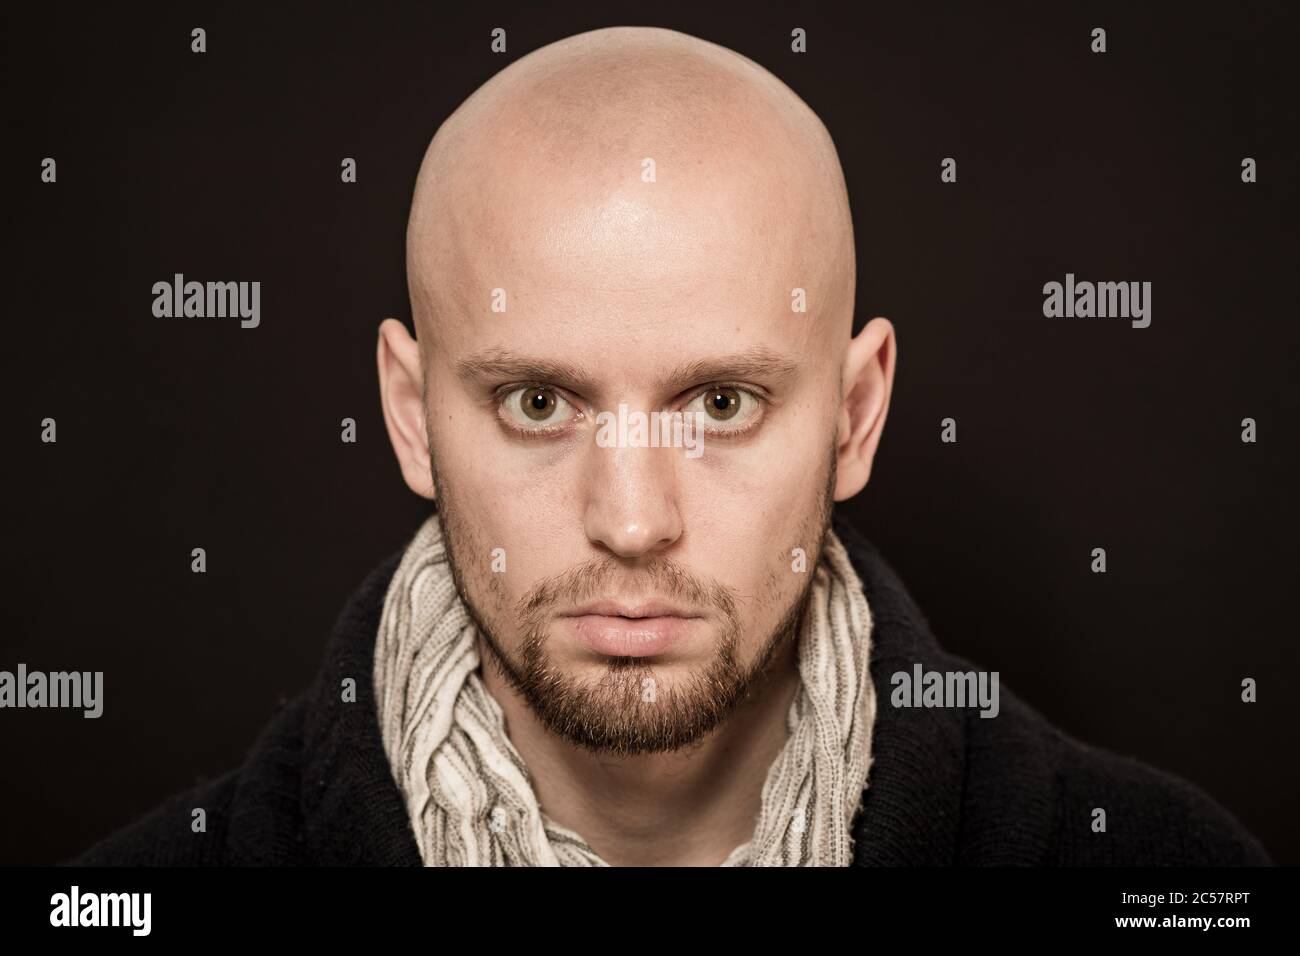 calvizie skinhead rasata testa uomo arrabbiato razzista Foto Stock